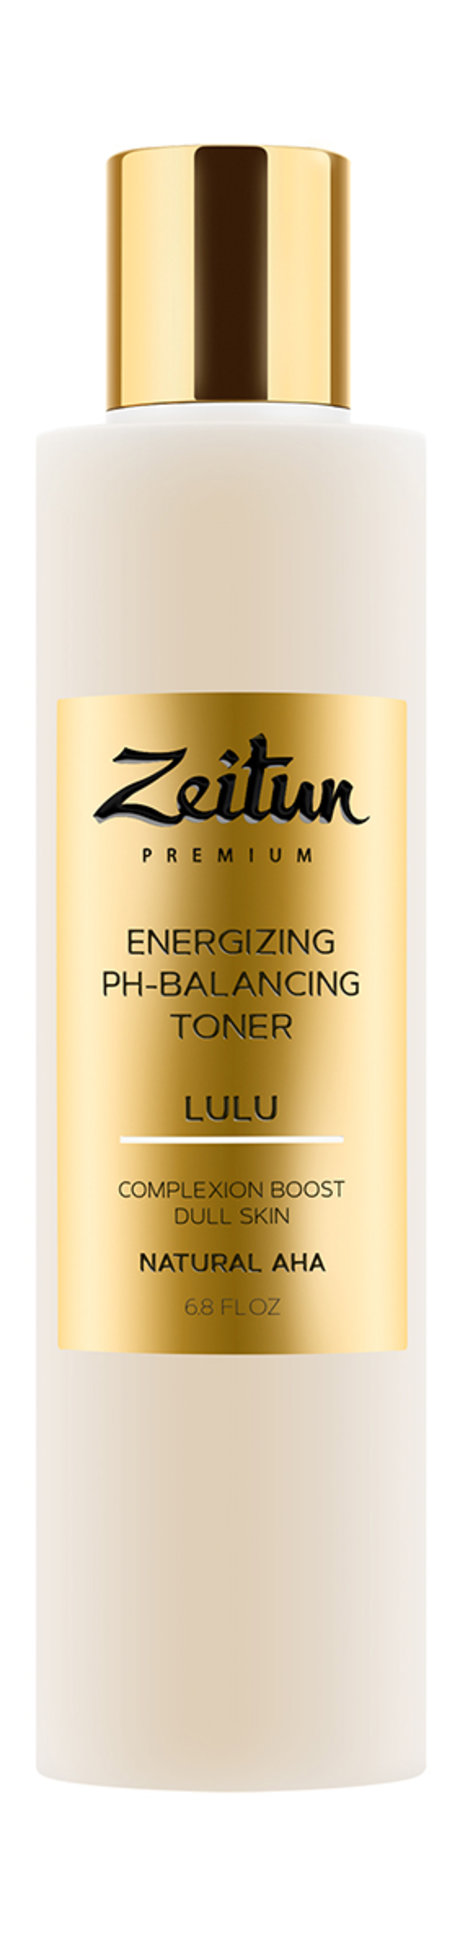 zeitun lulu energizing ph-balancing toner